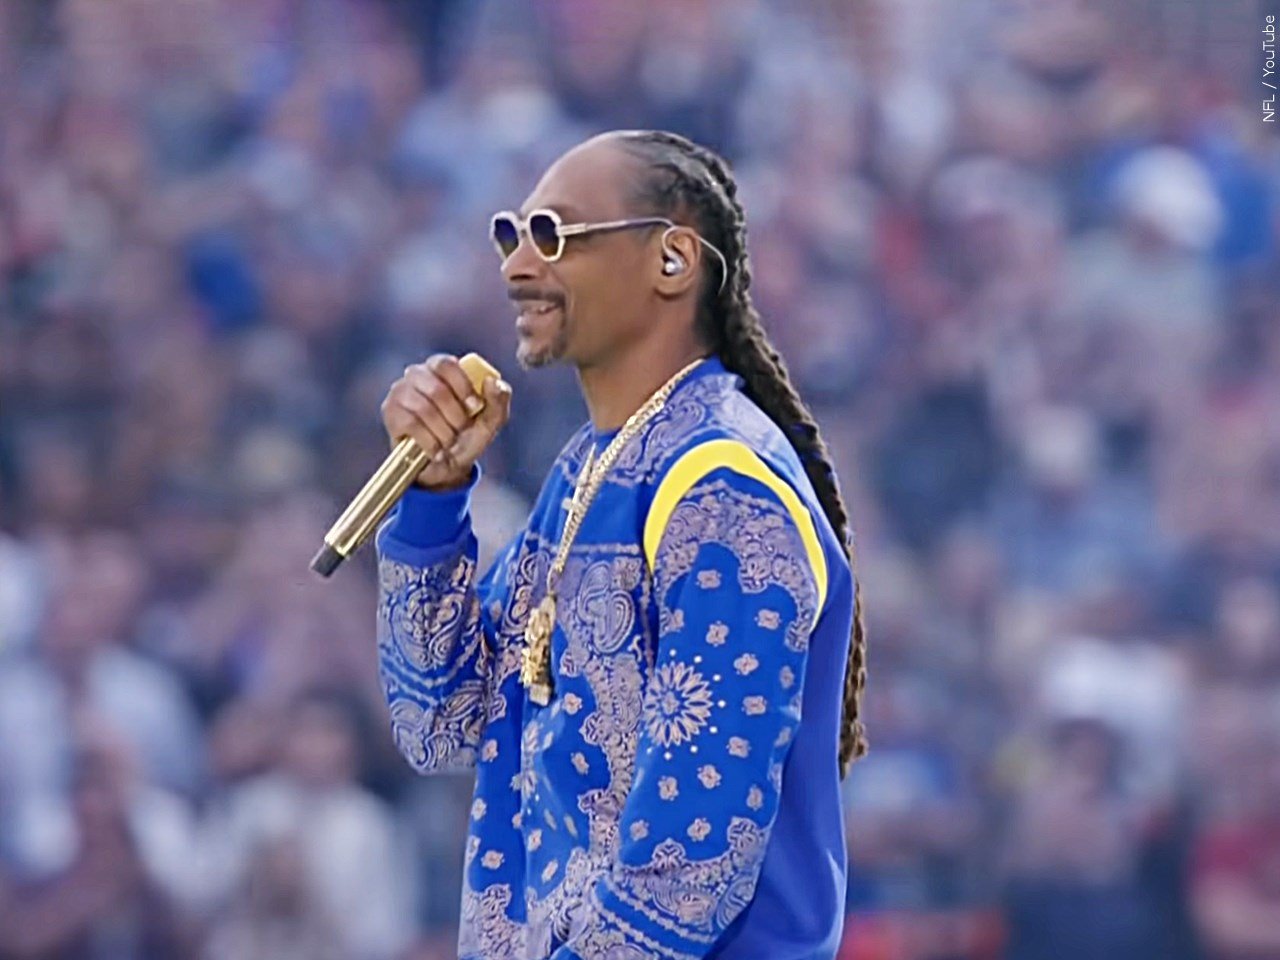 Snoop Dogg in the second installment of Snoop Dogg “Hockey